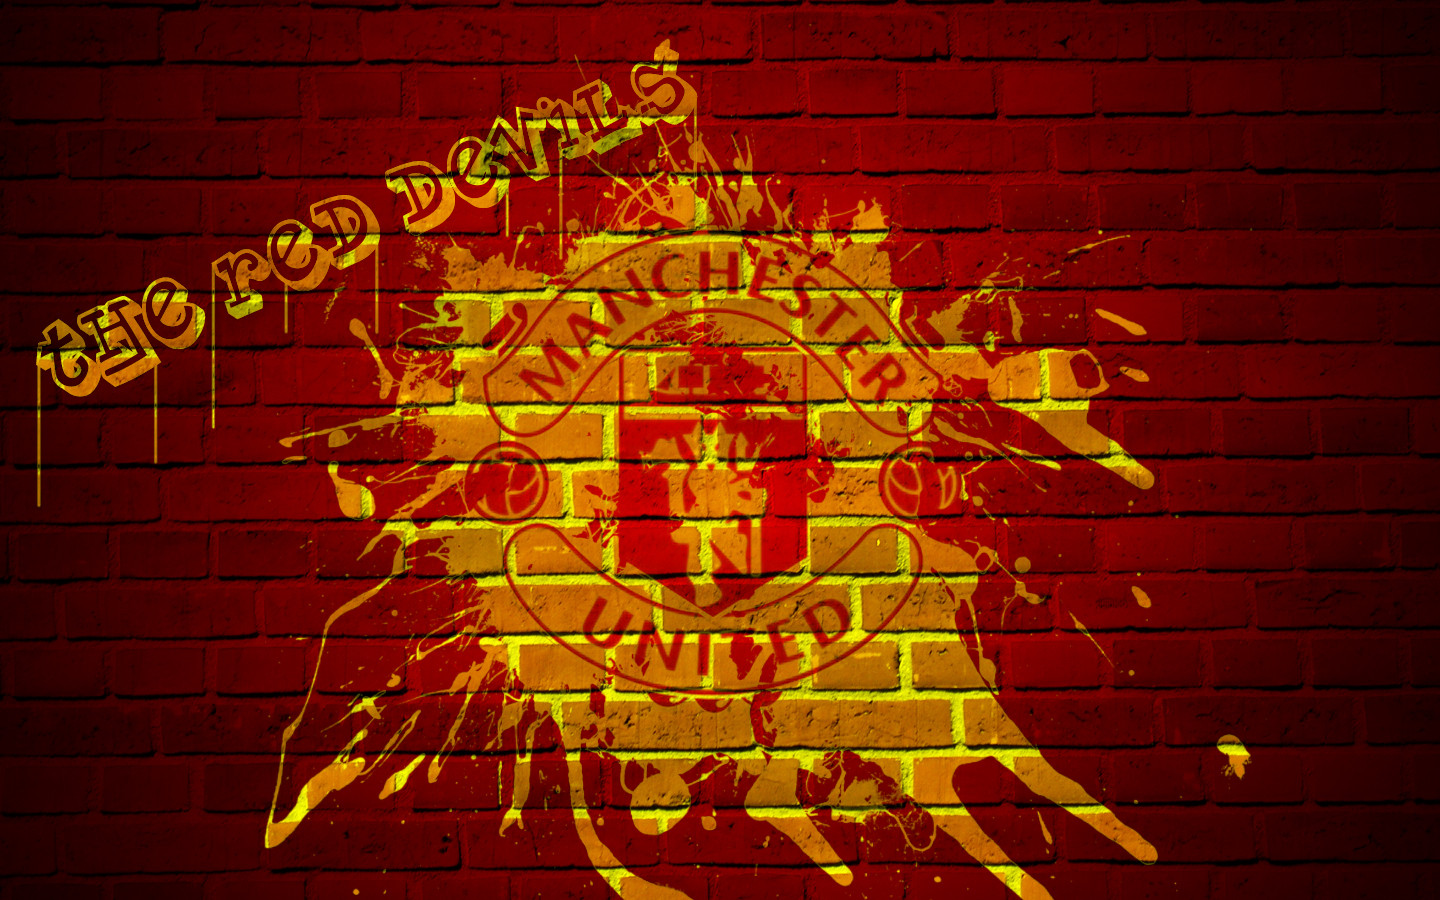 Manchester United Logo Graffiti 2015 | View HD